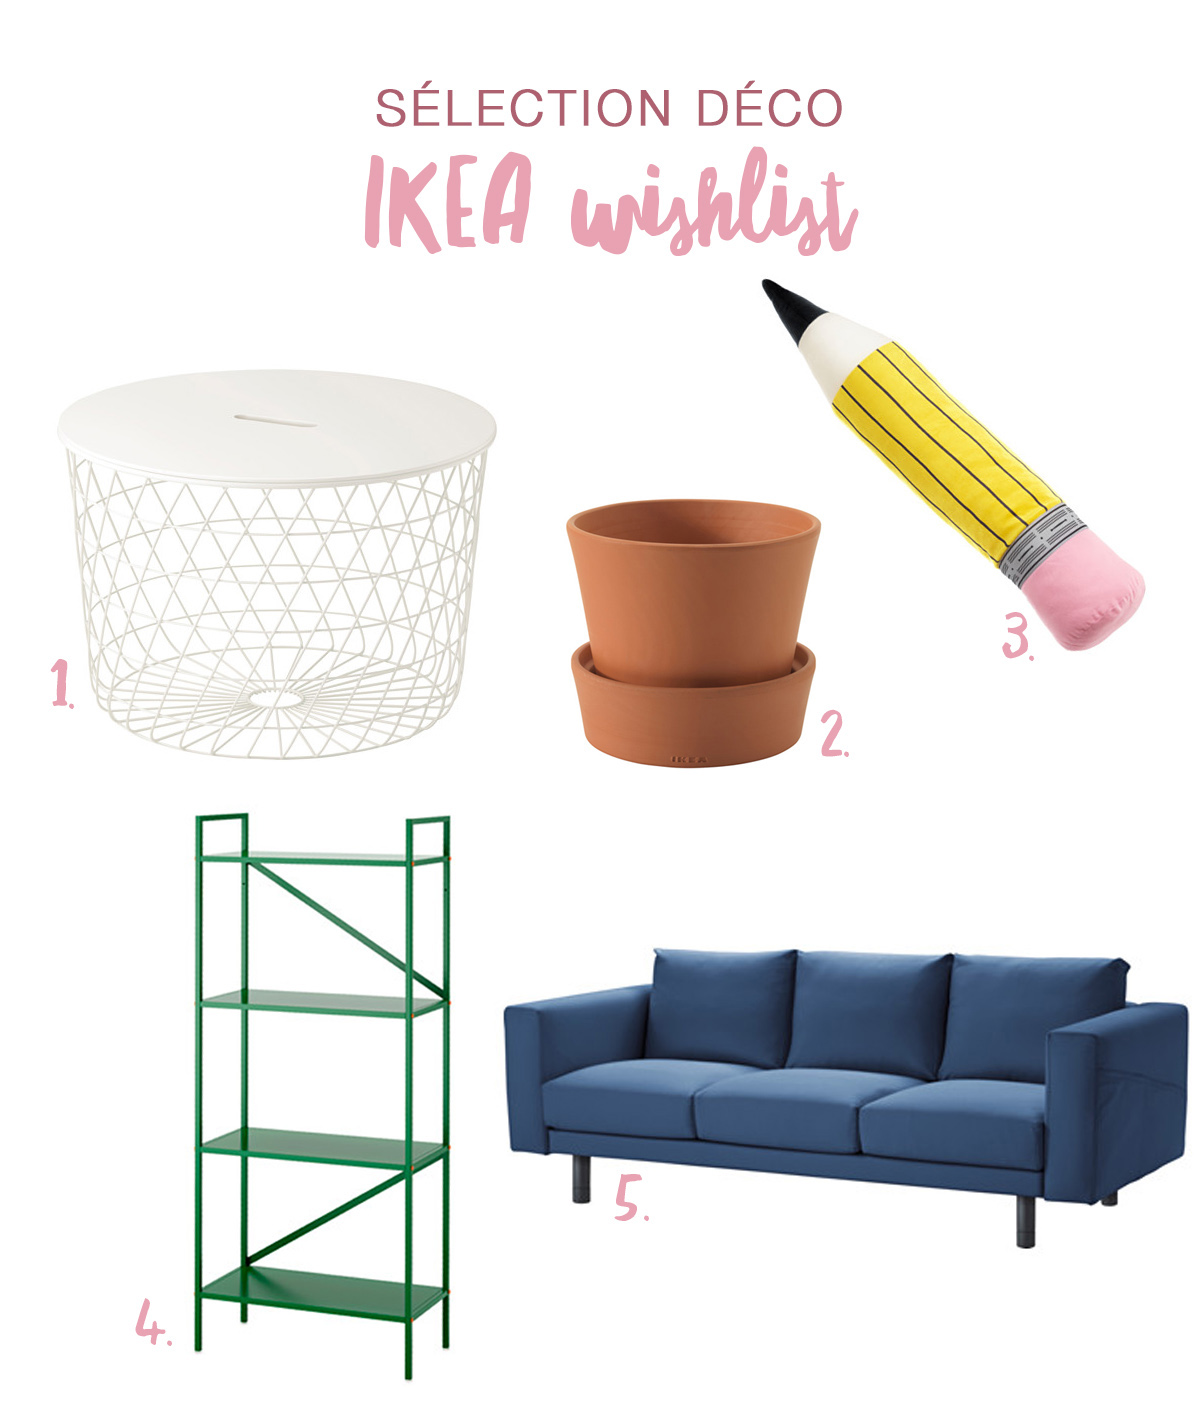 Ikea Wishlist